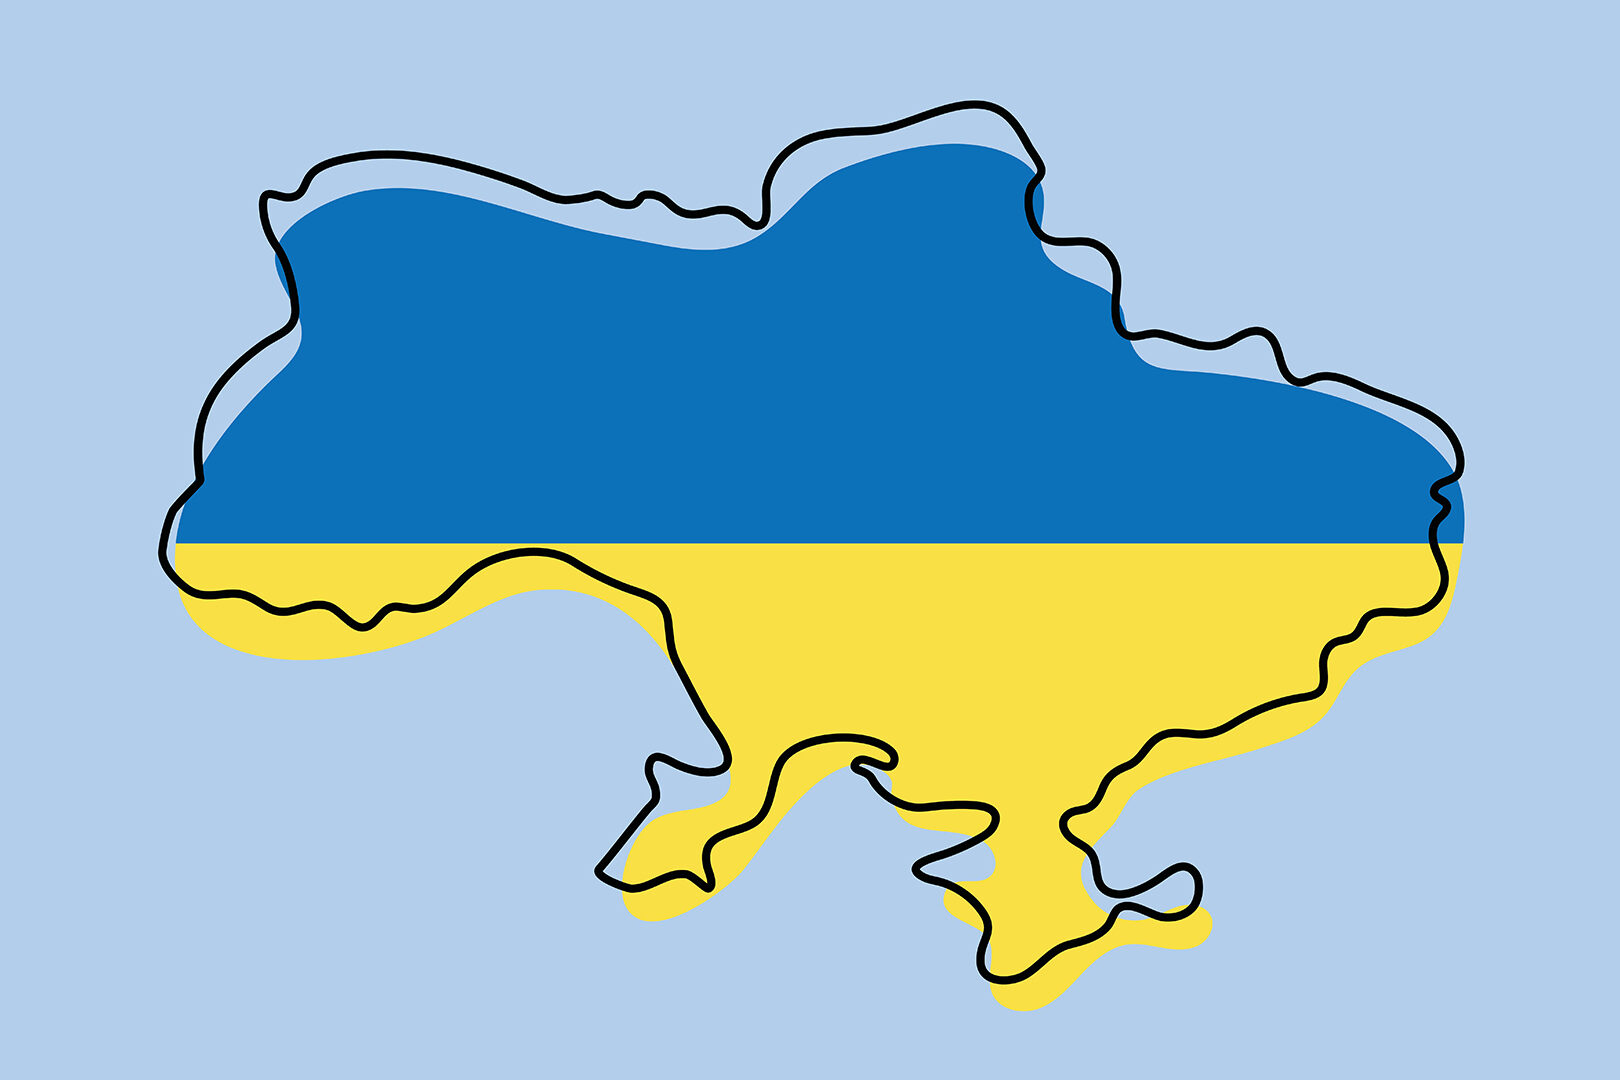 EU et år efter invasionen i Ukraine